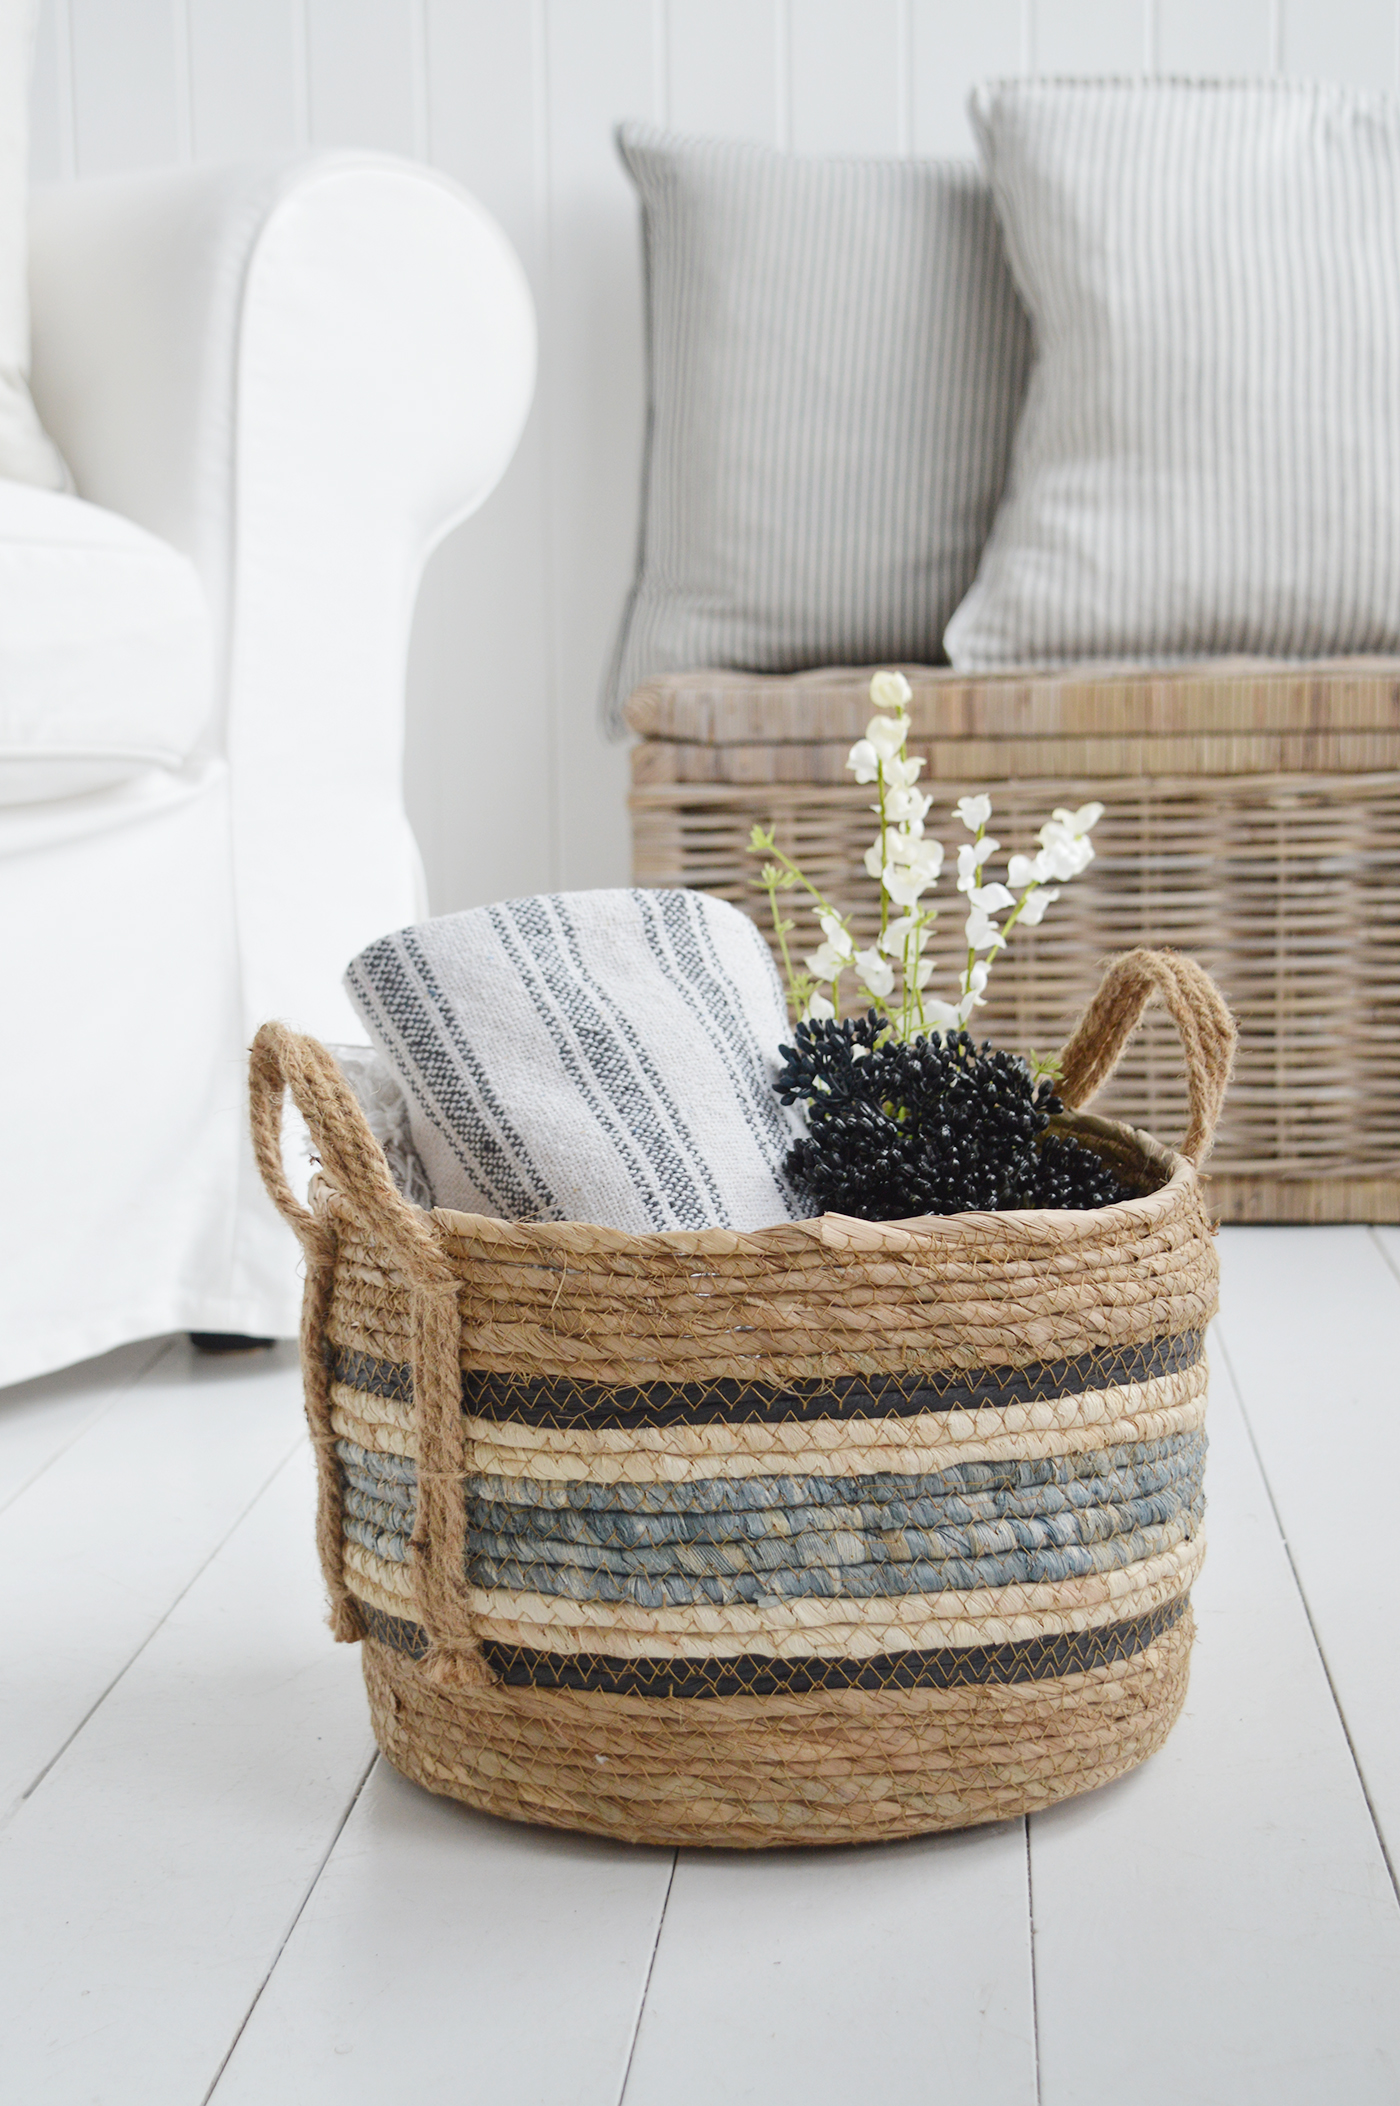 Princeton basket - perfect for coastal homes